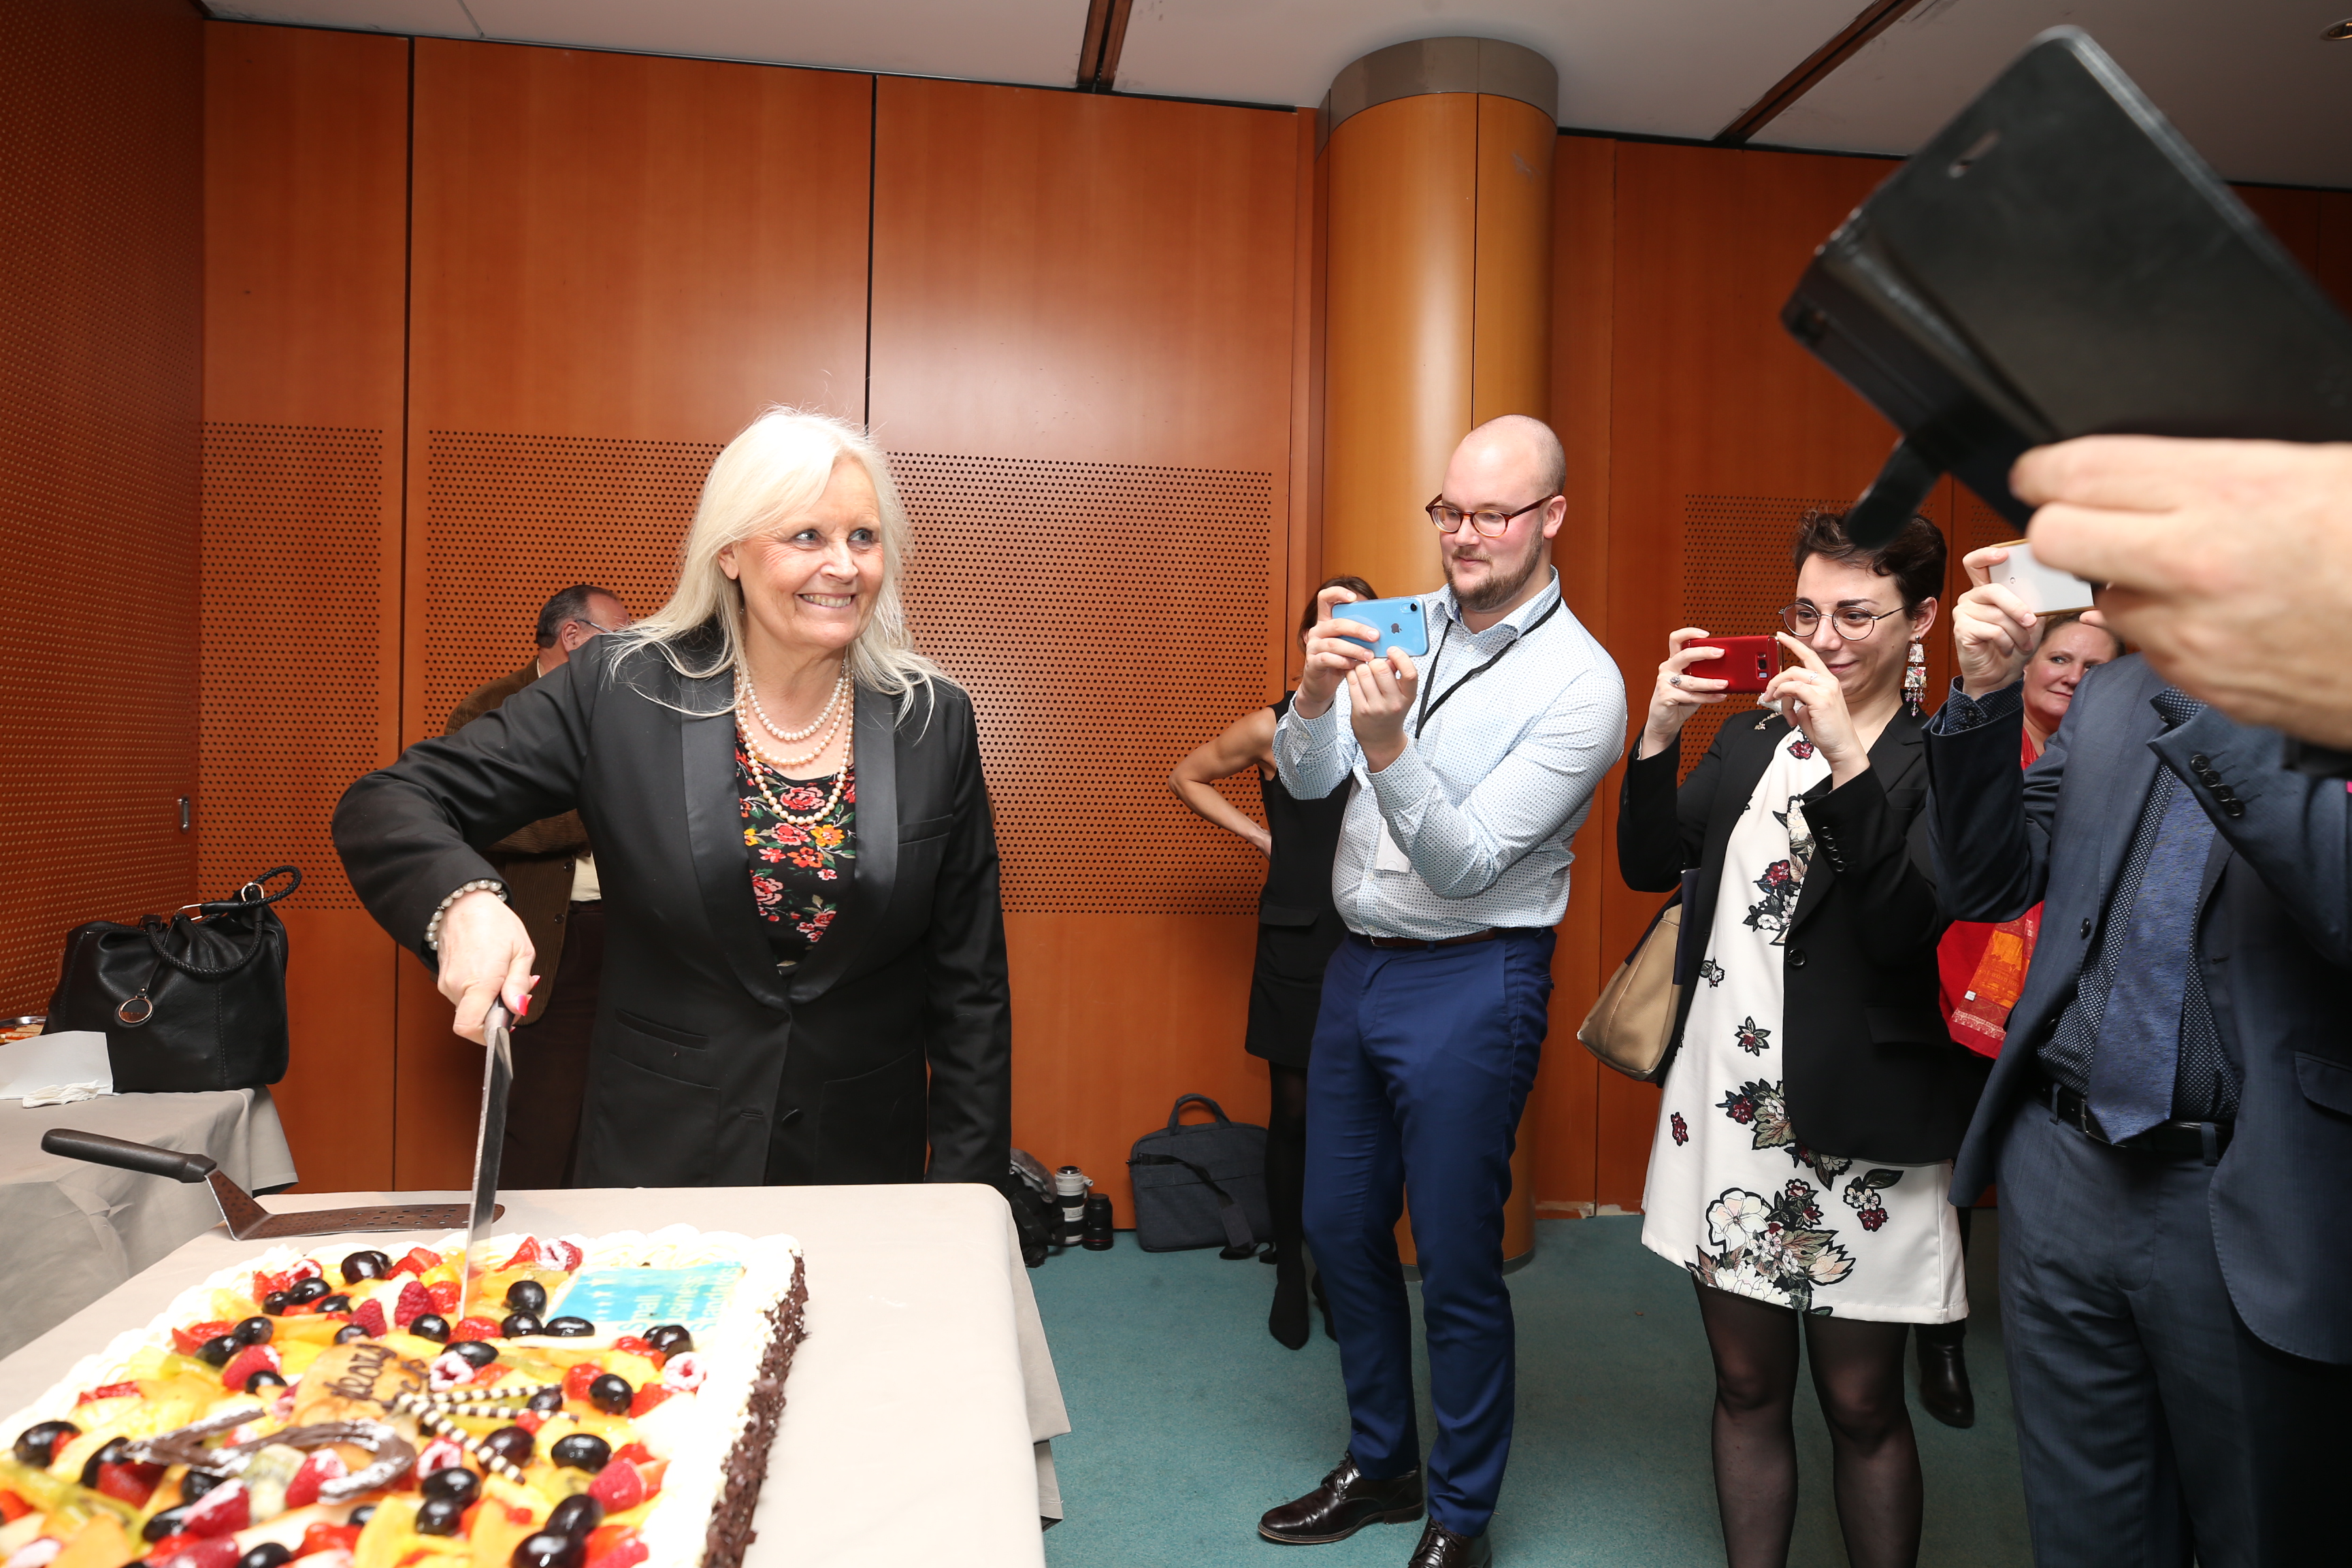 SBS president cutting a cake